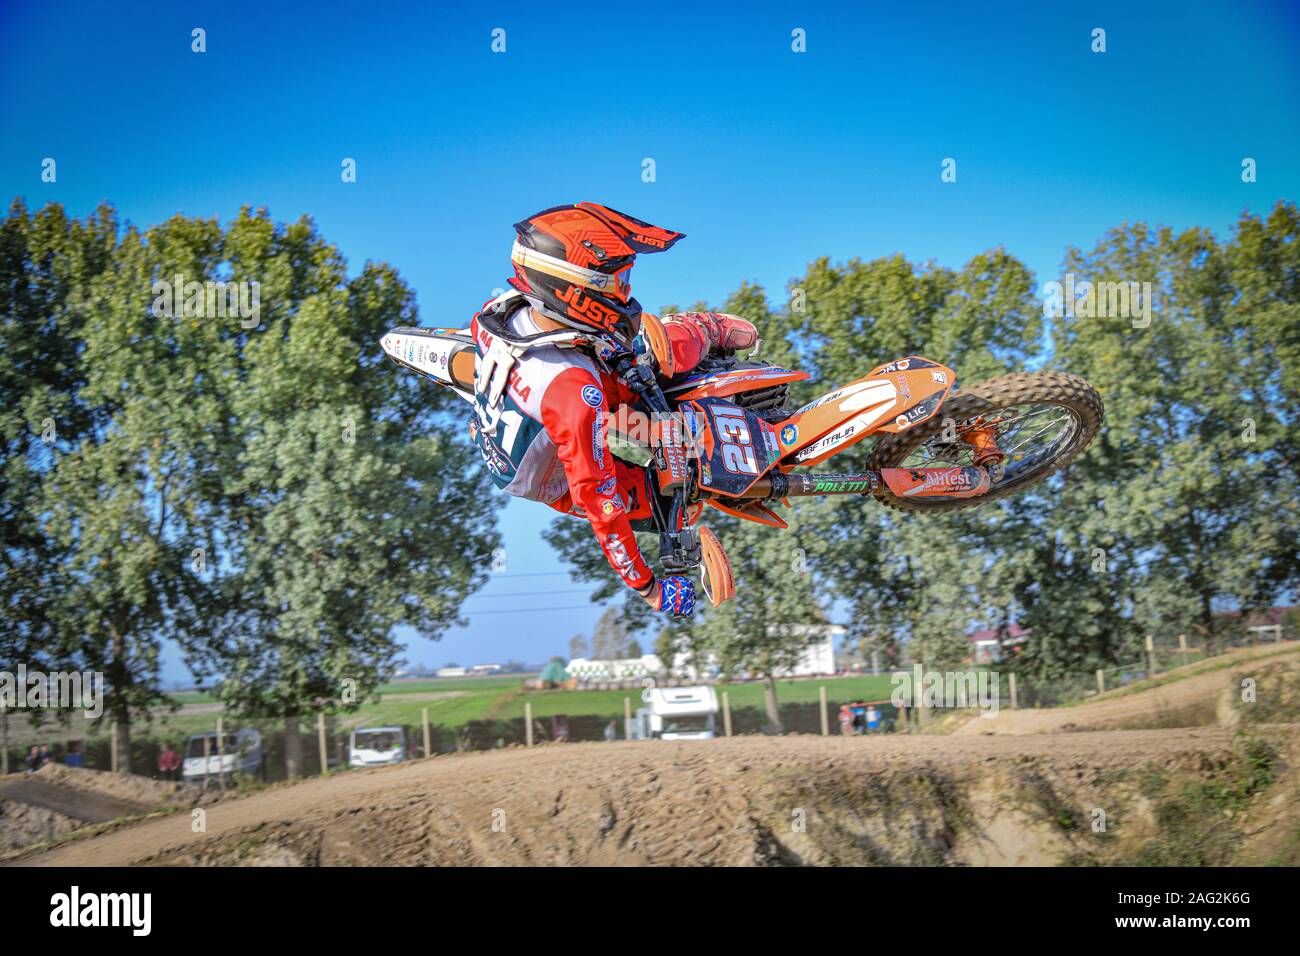 MOTOCROSS Whip by Simone Malagola at Rivarolo Mantovano @2019 Stock Photo